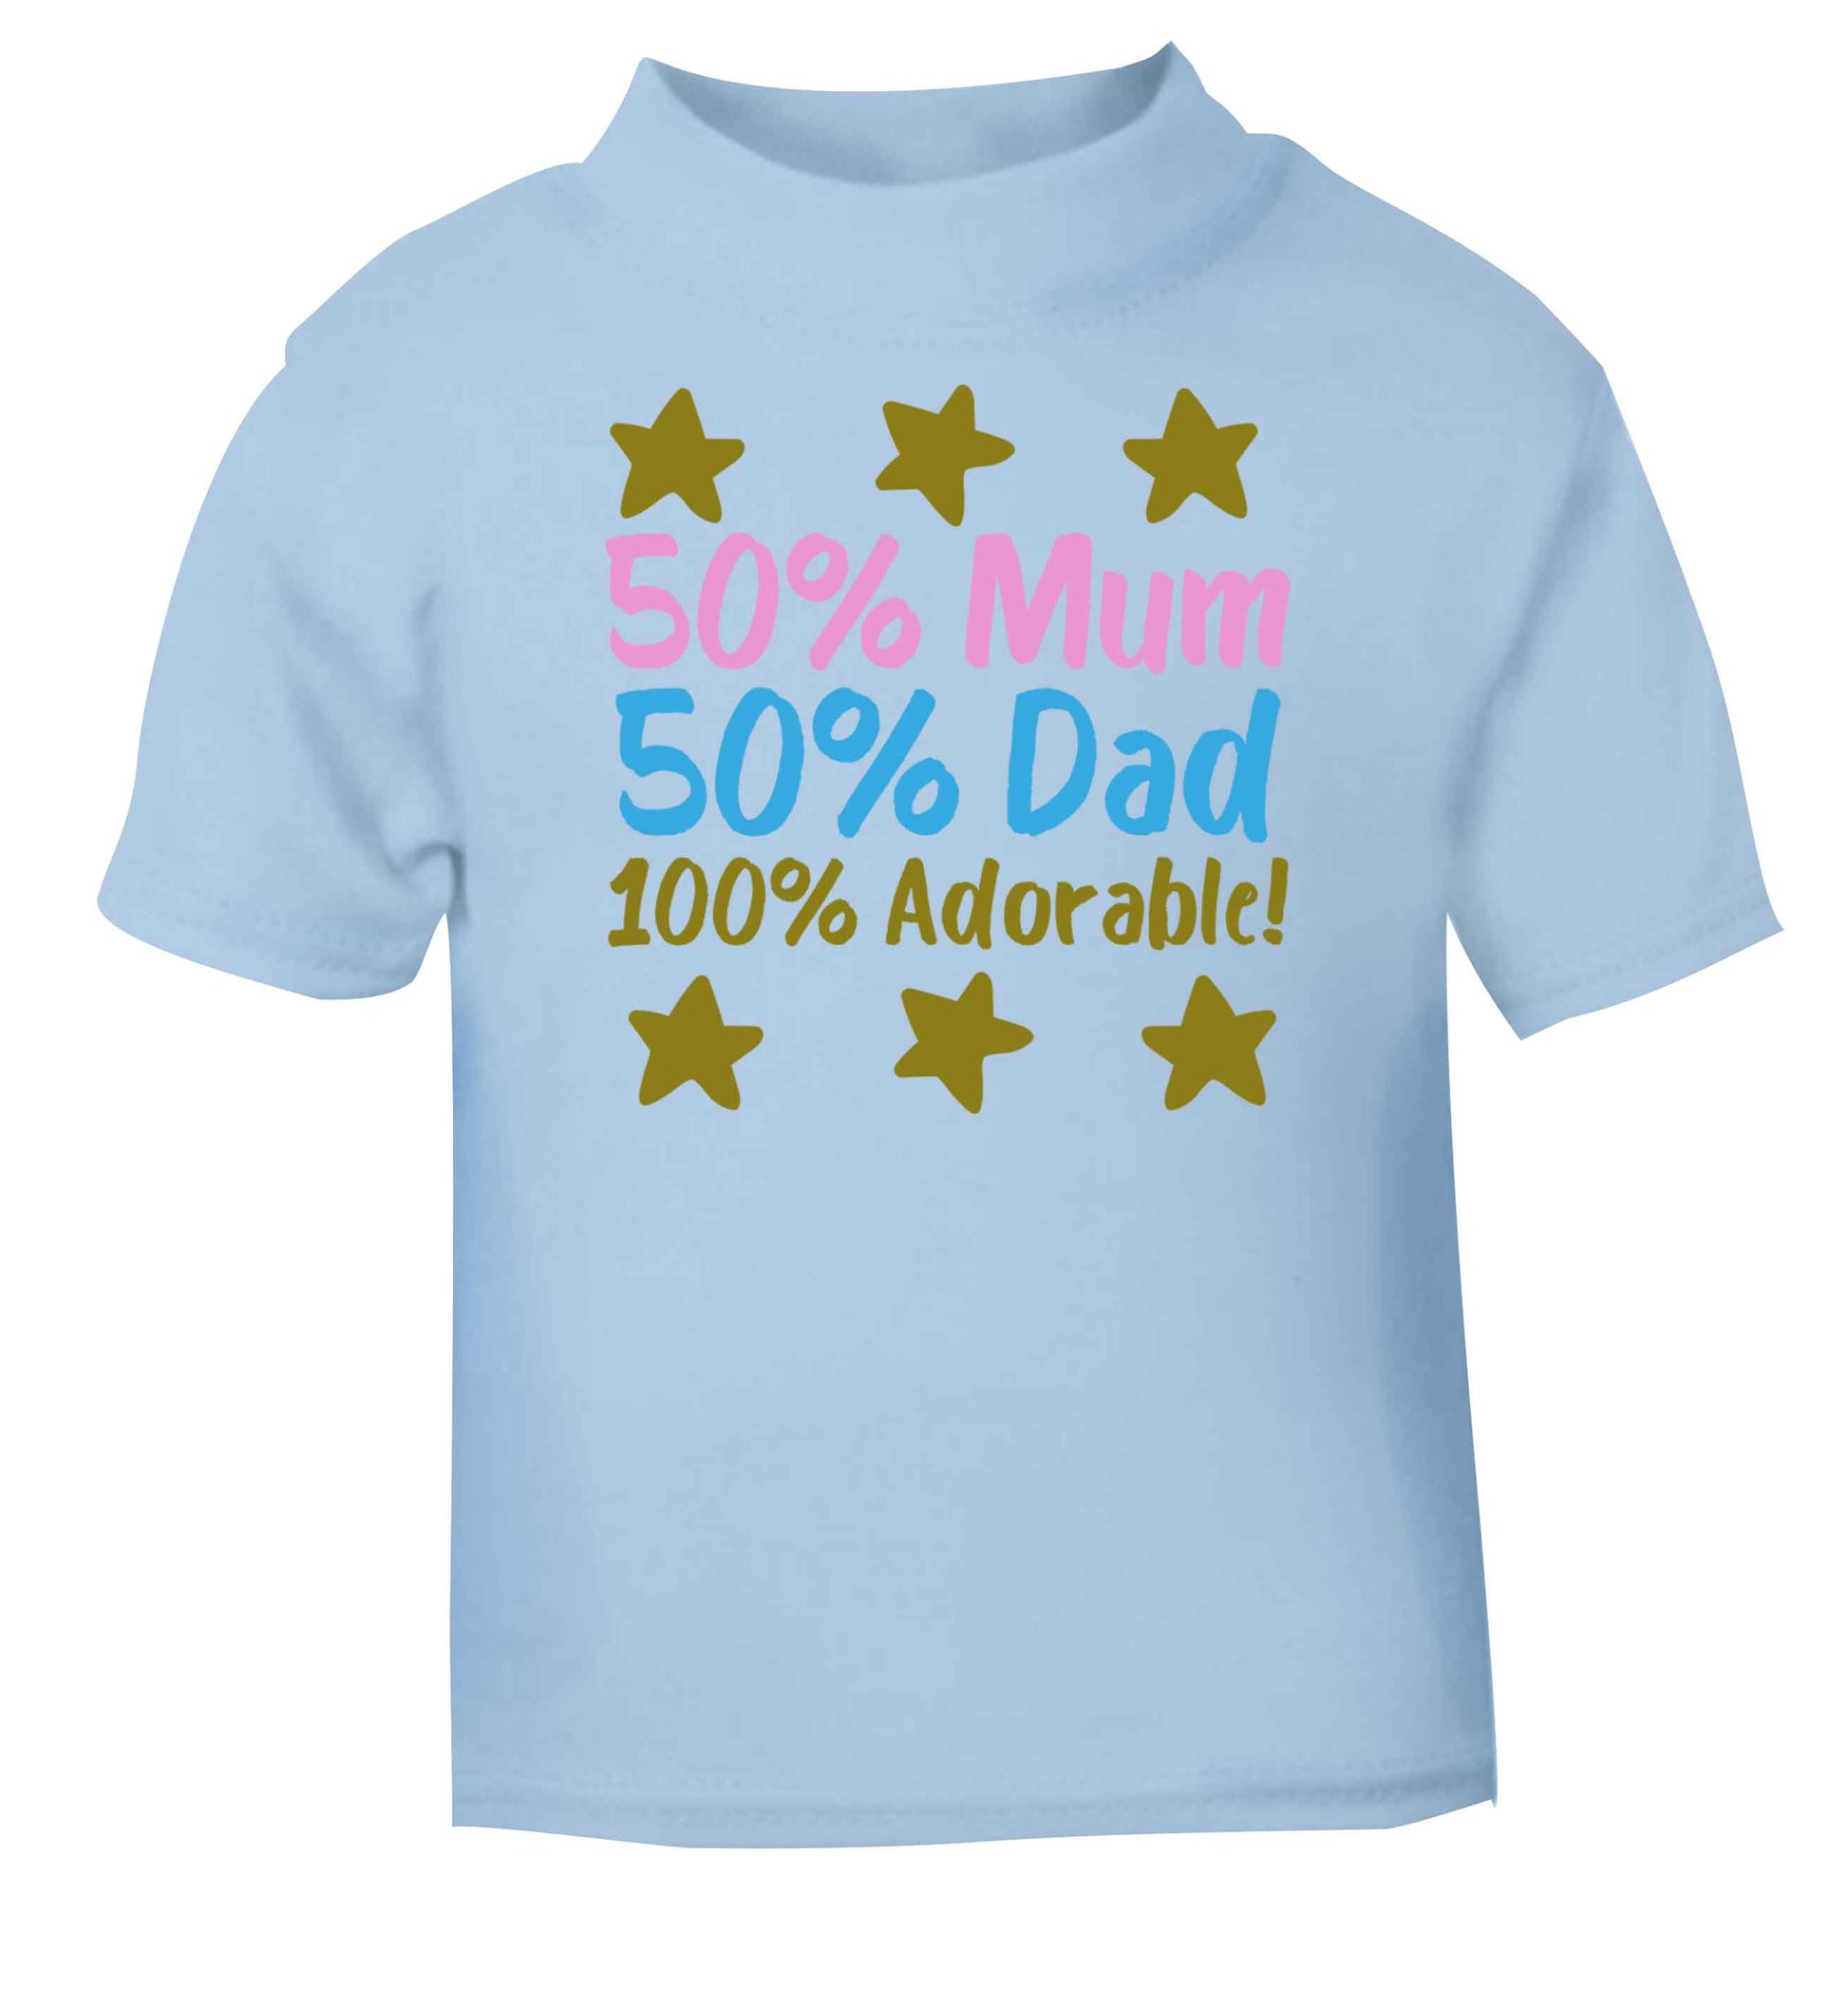 50% mum 50% dad 100% adorable light blue baby toddler Tshirt 2 Years